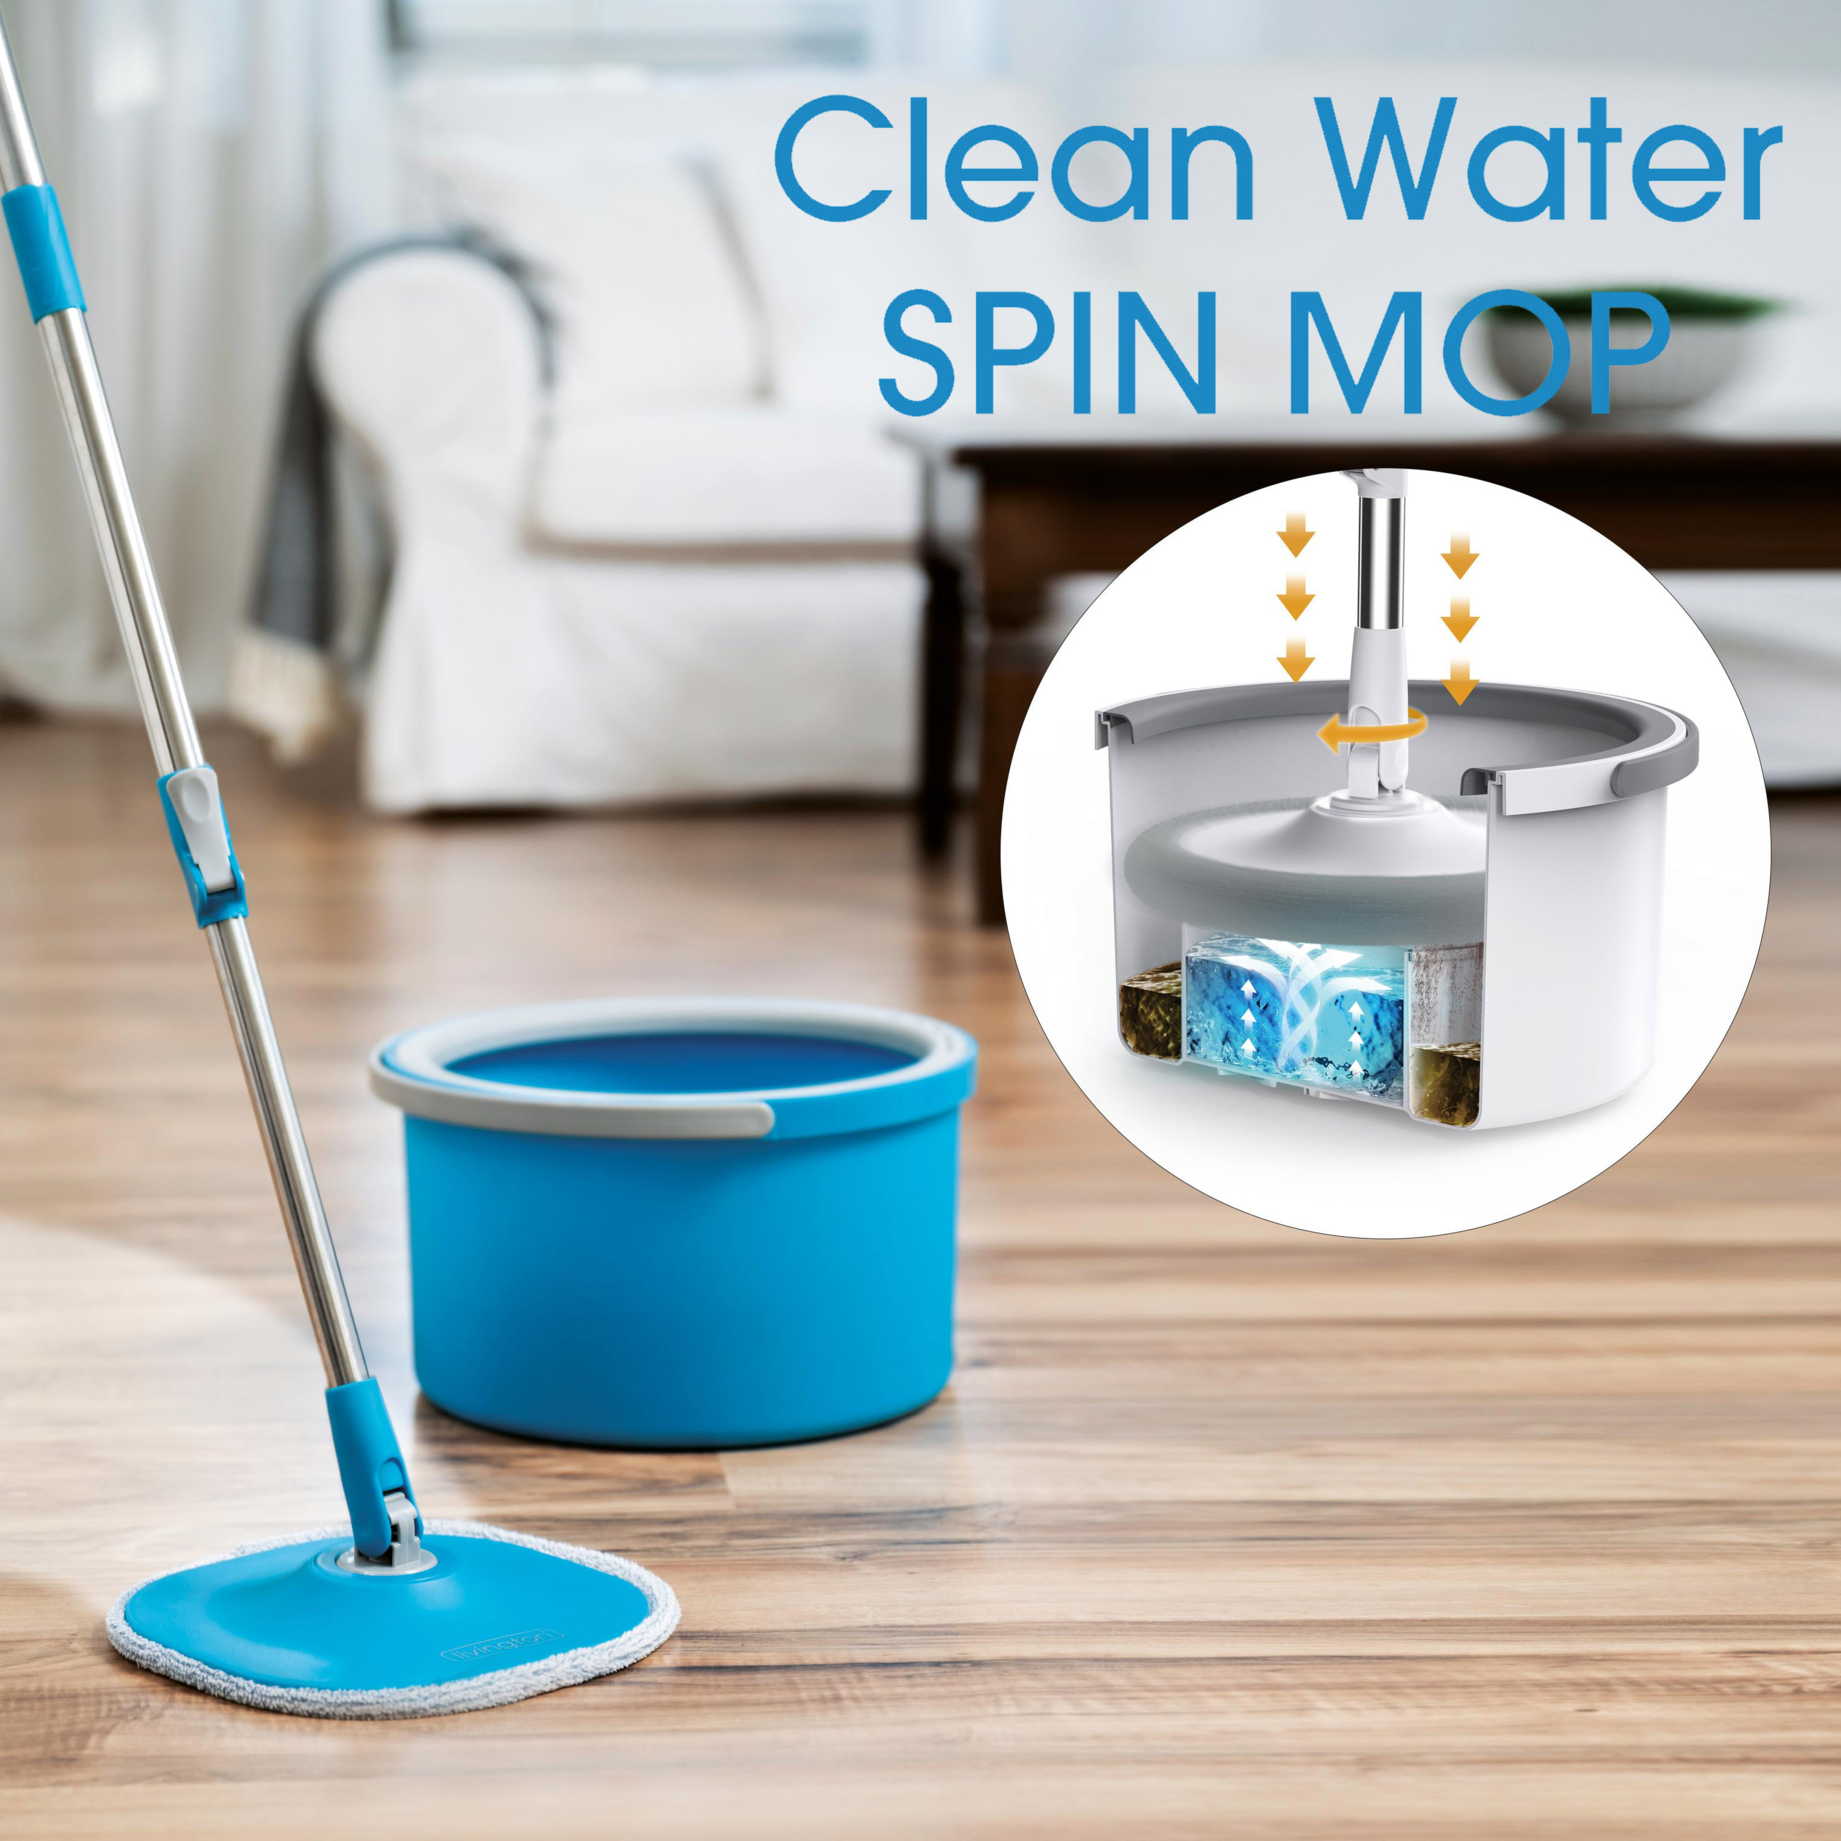 Clean Water Spin Mop mocio leggerissimo e super efficace ACQUA